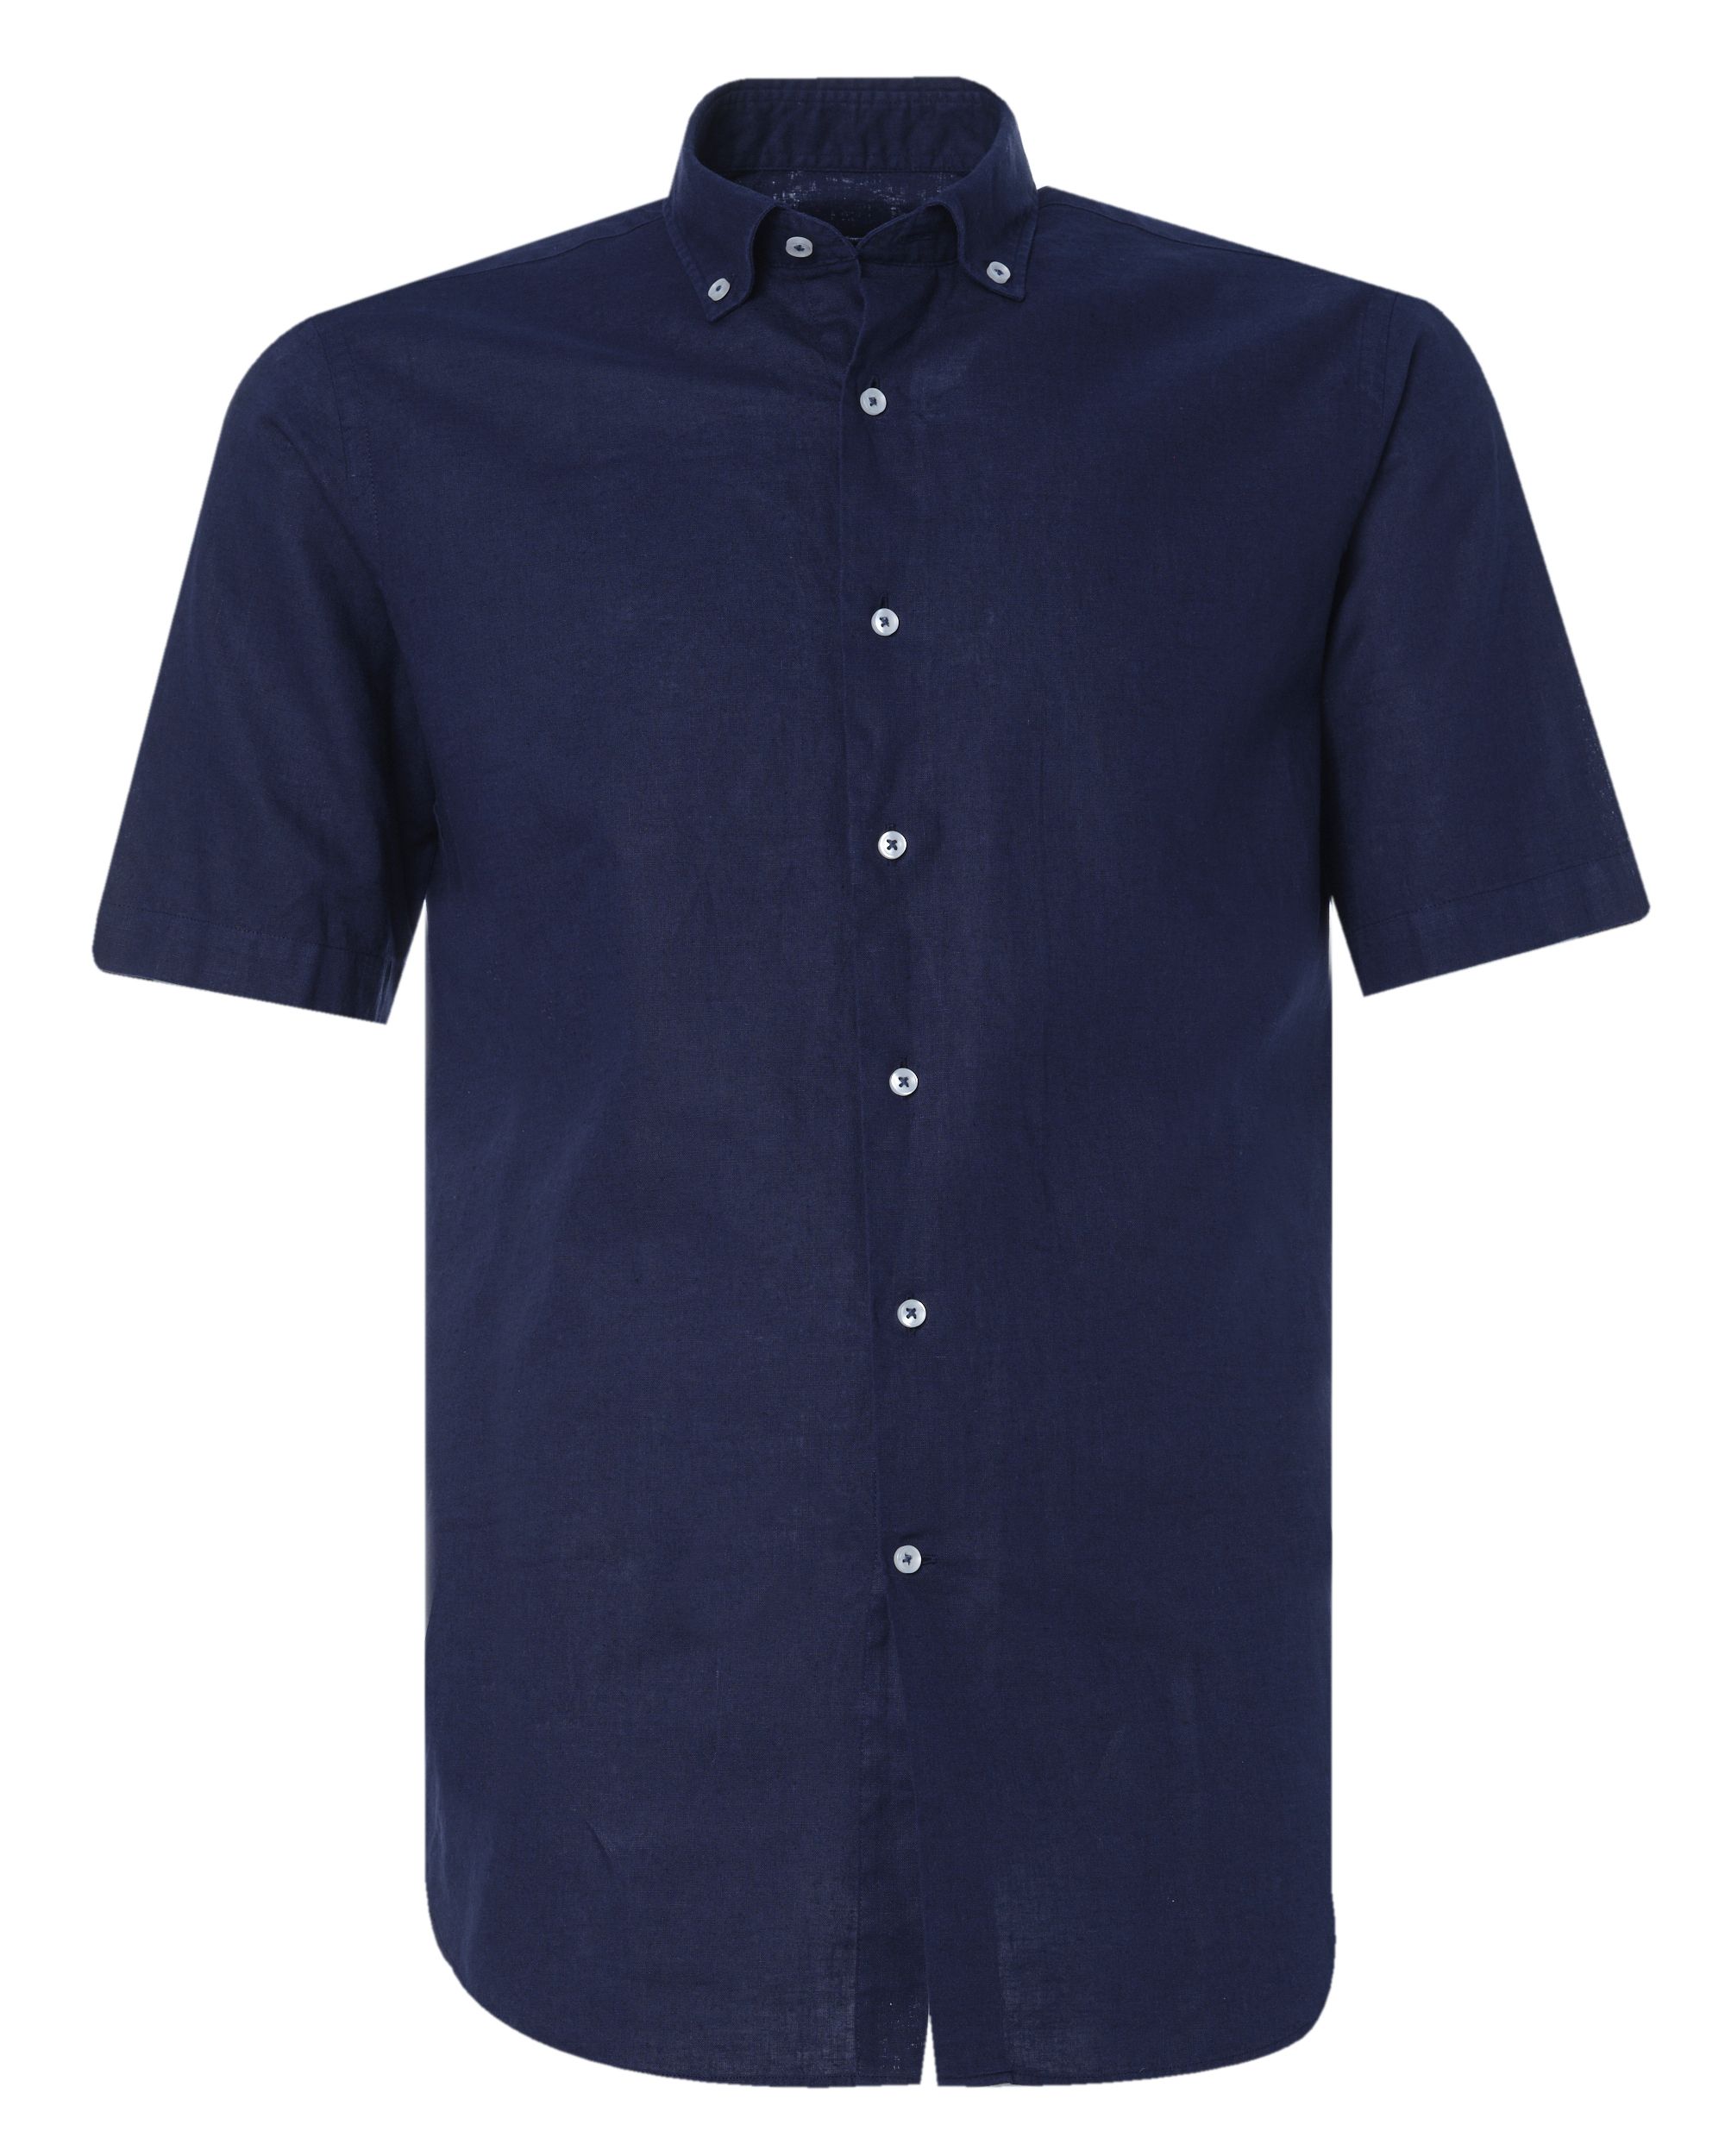 The BLUEPRINT Premium Casual Overhemd KM Donkerblauw uni 077930-002-L